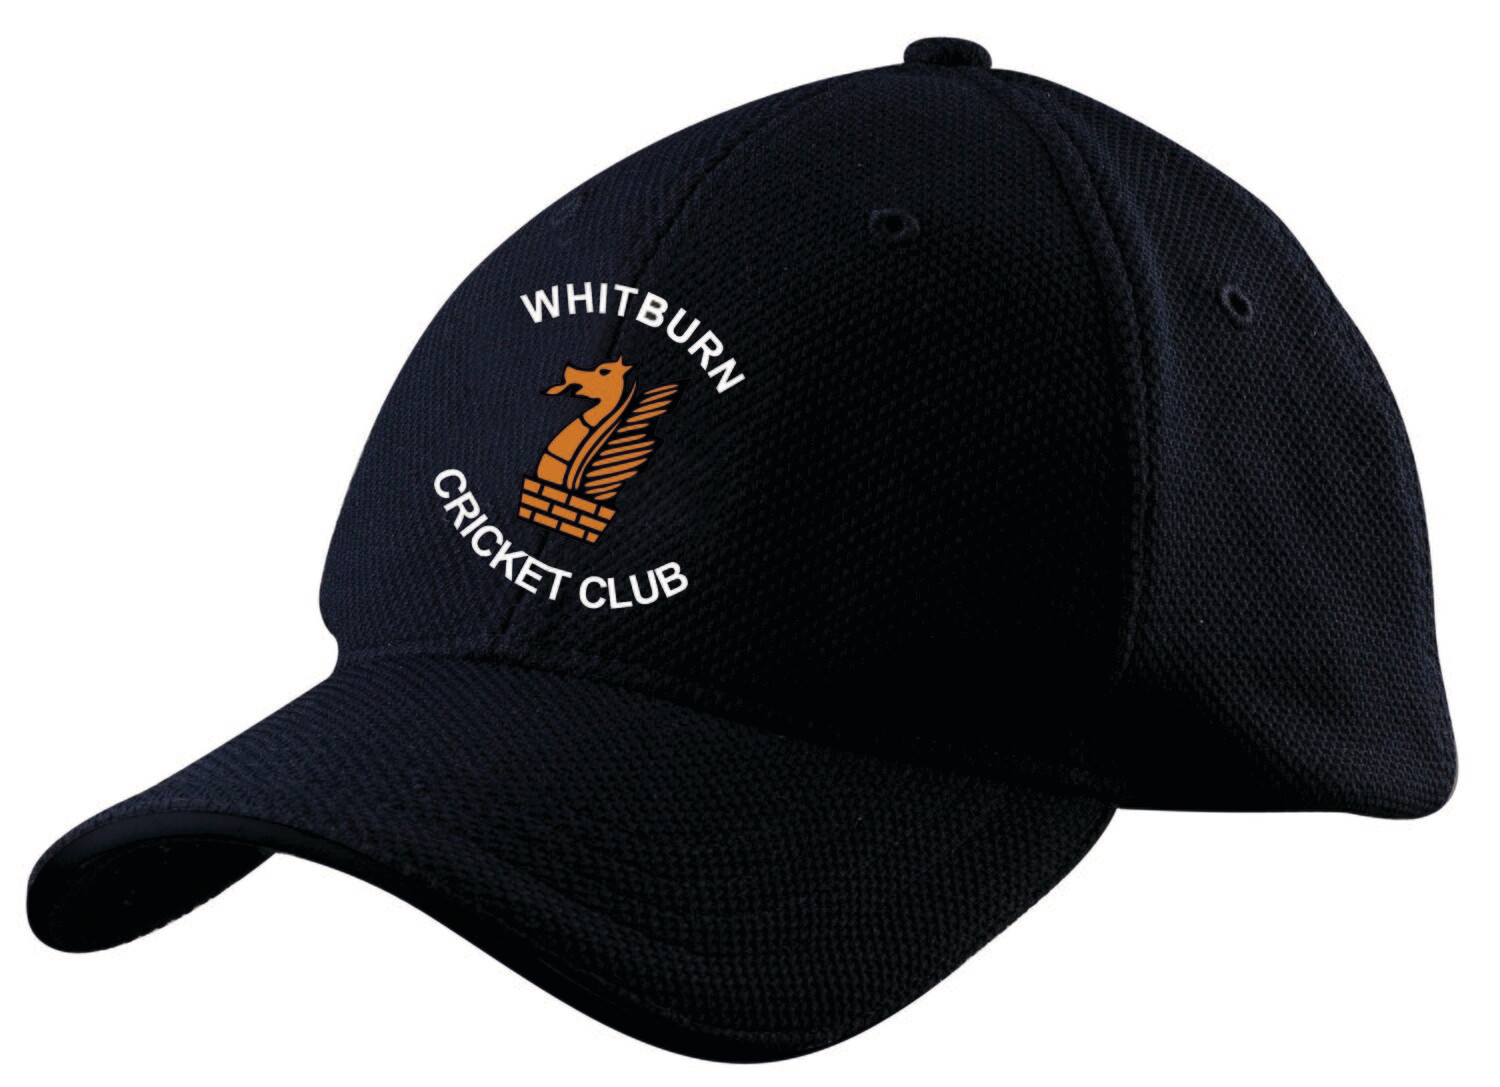 Whitburn Cricket Cap